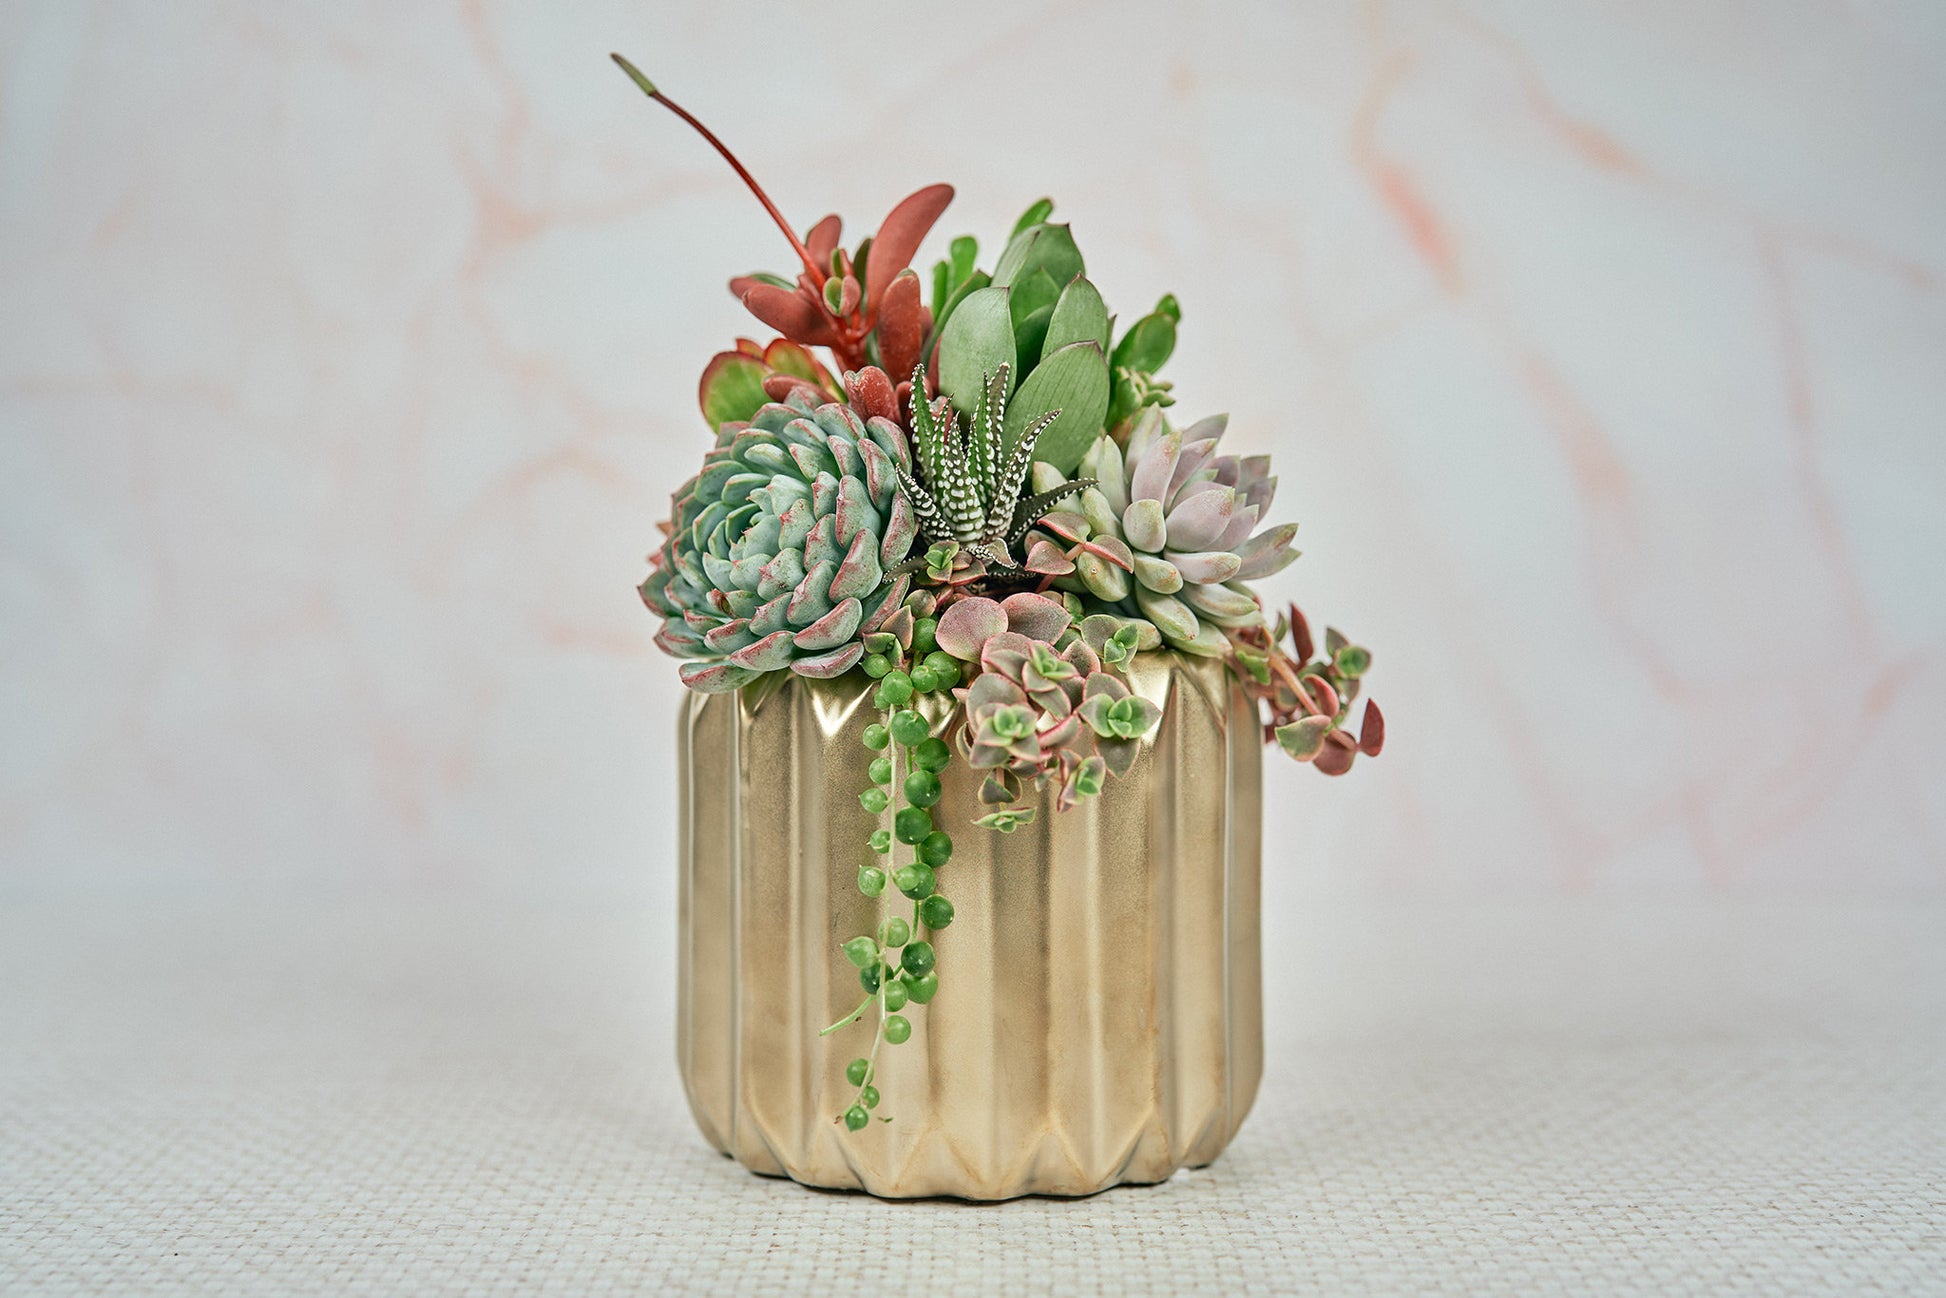 Golden Groovy Living Succulent Arrangement Gift | Birthday, Celebration, House Warming Living Gift for Plant Lovers